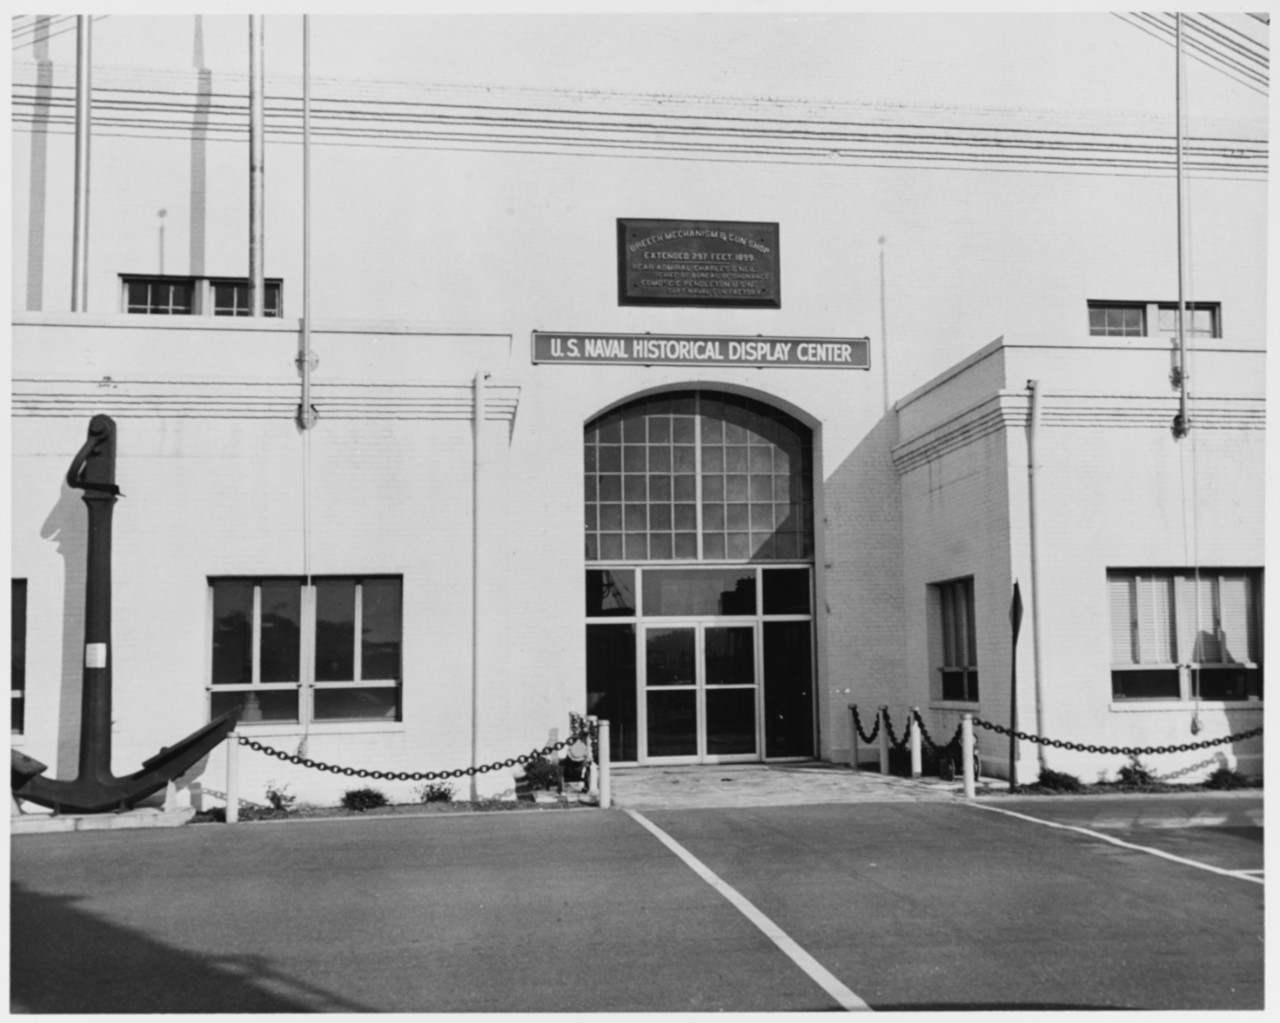 U.S. Naval Historical Display Center entrance. Washington, D.C., 1966.